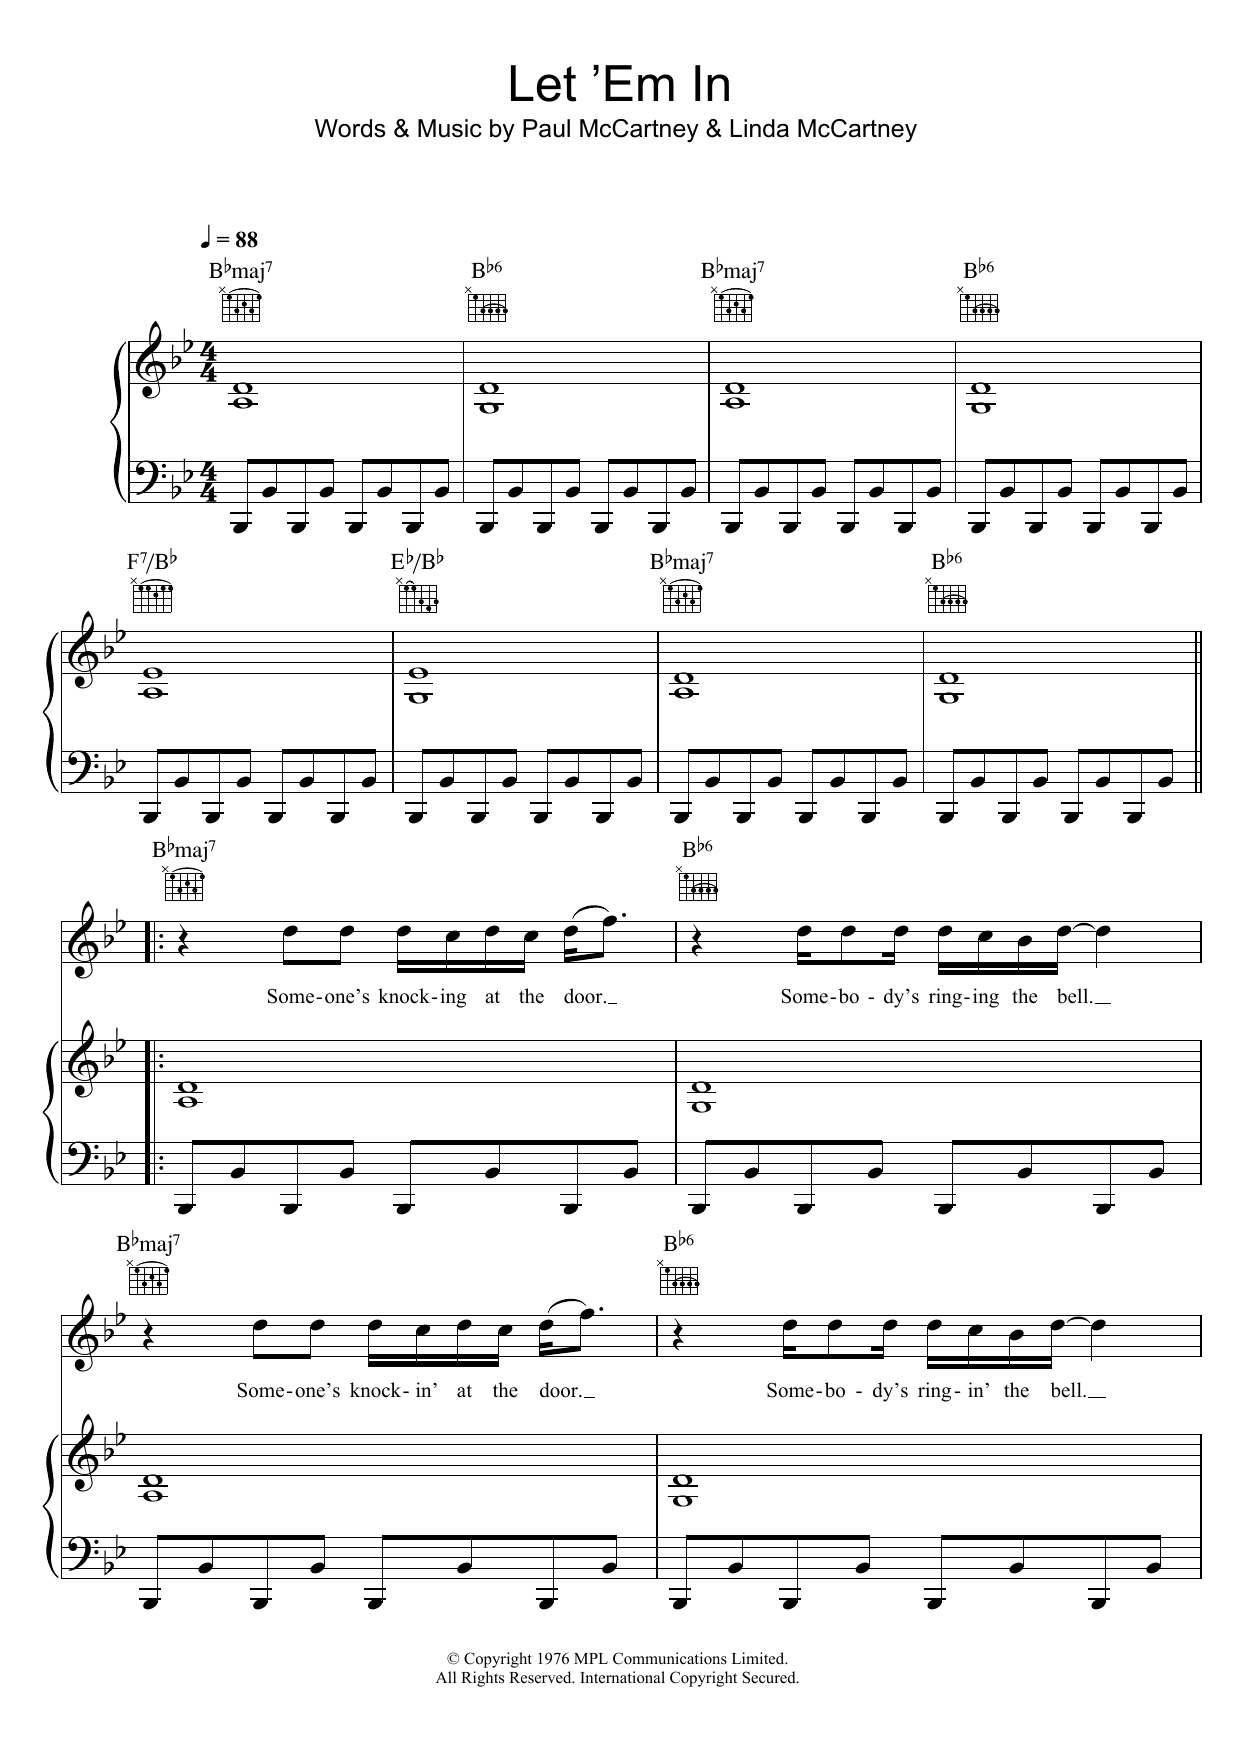 Wings Let 'Em In Sheet Music Notes & Chords for Viola - Download or Print PDF